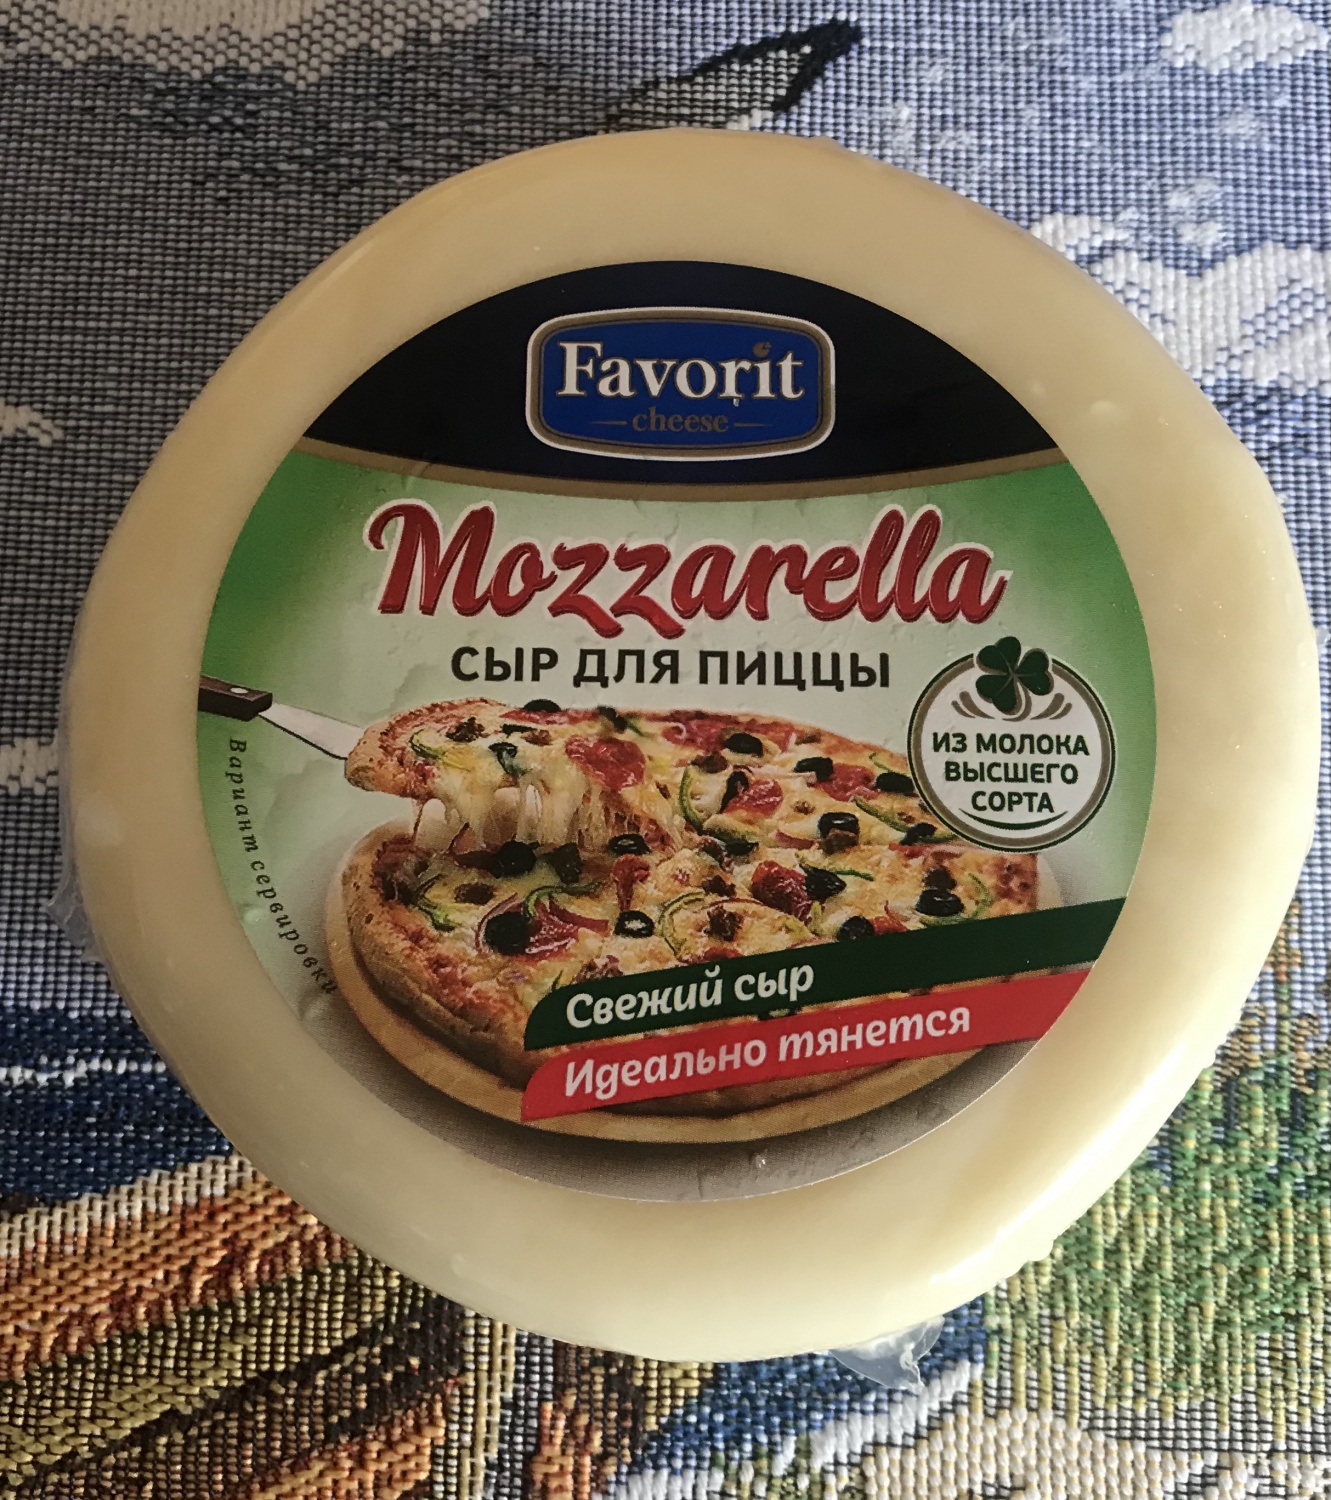 Сыр Претто моцарелла для пиццы